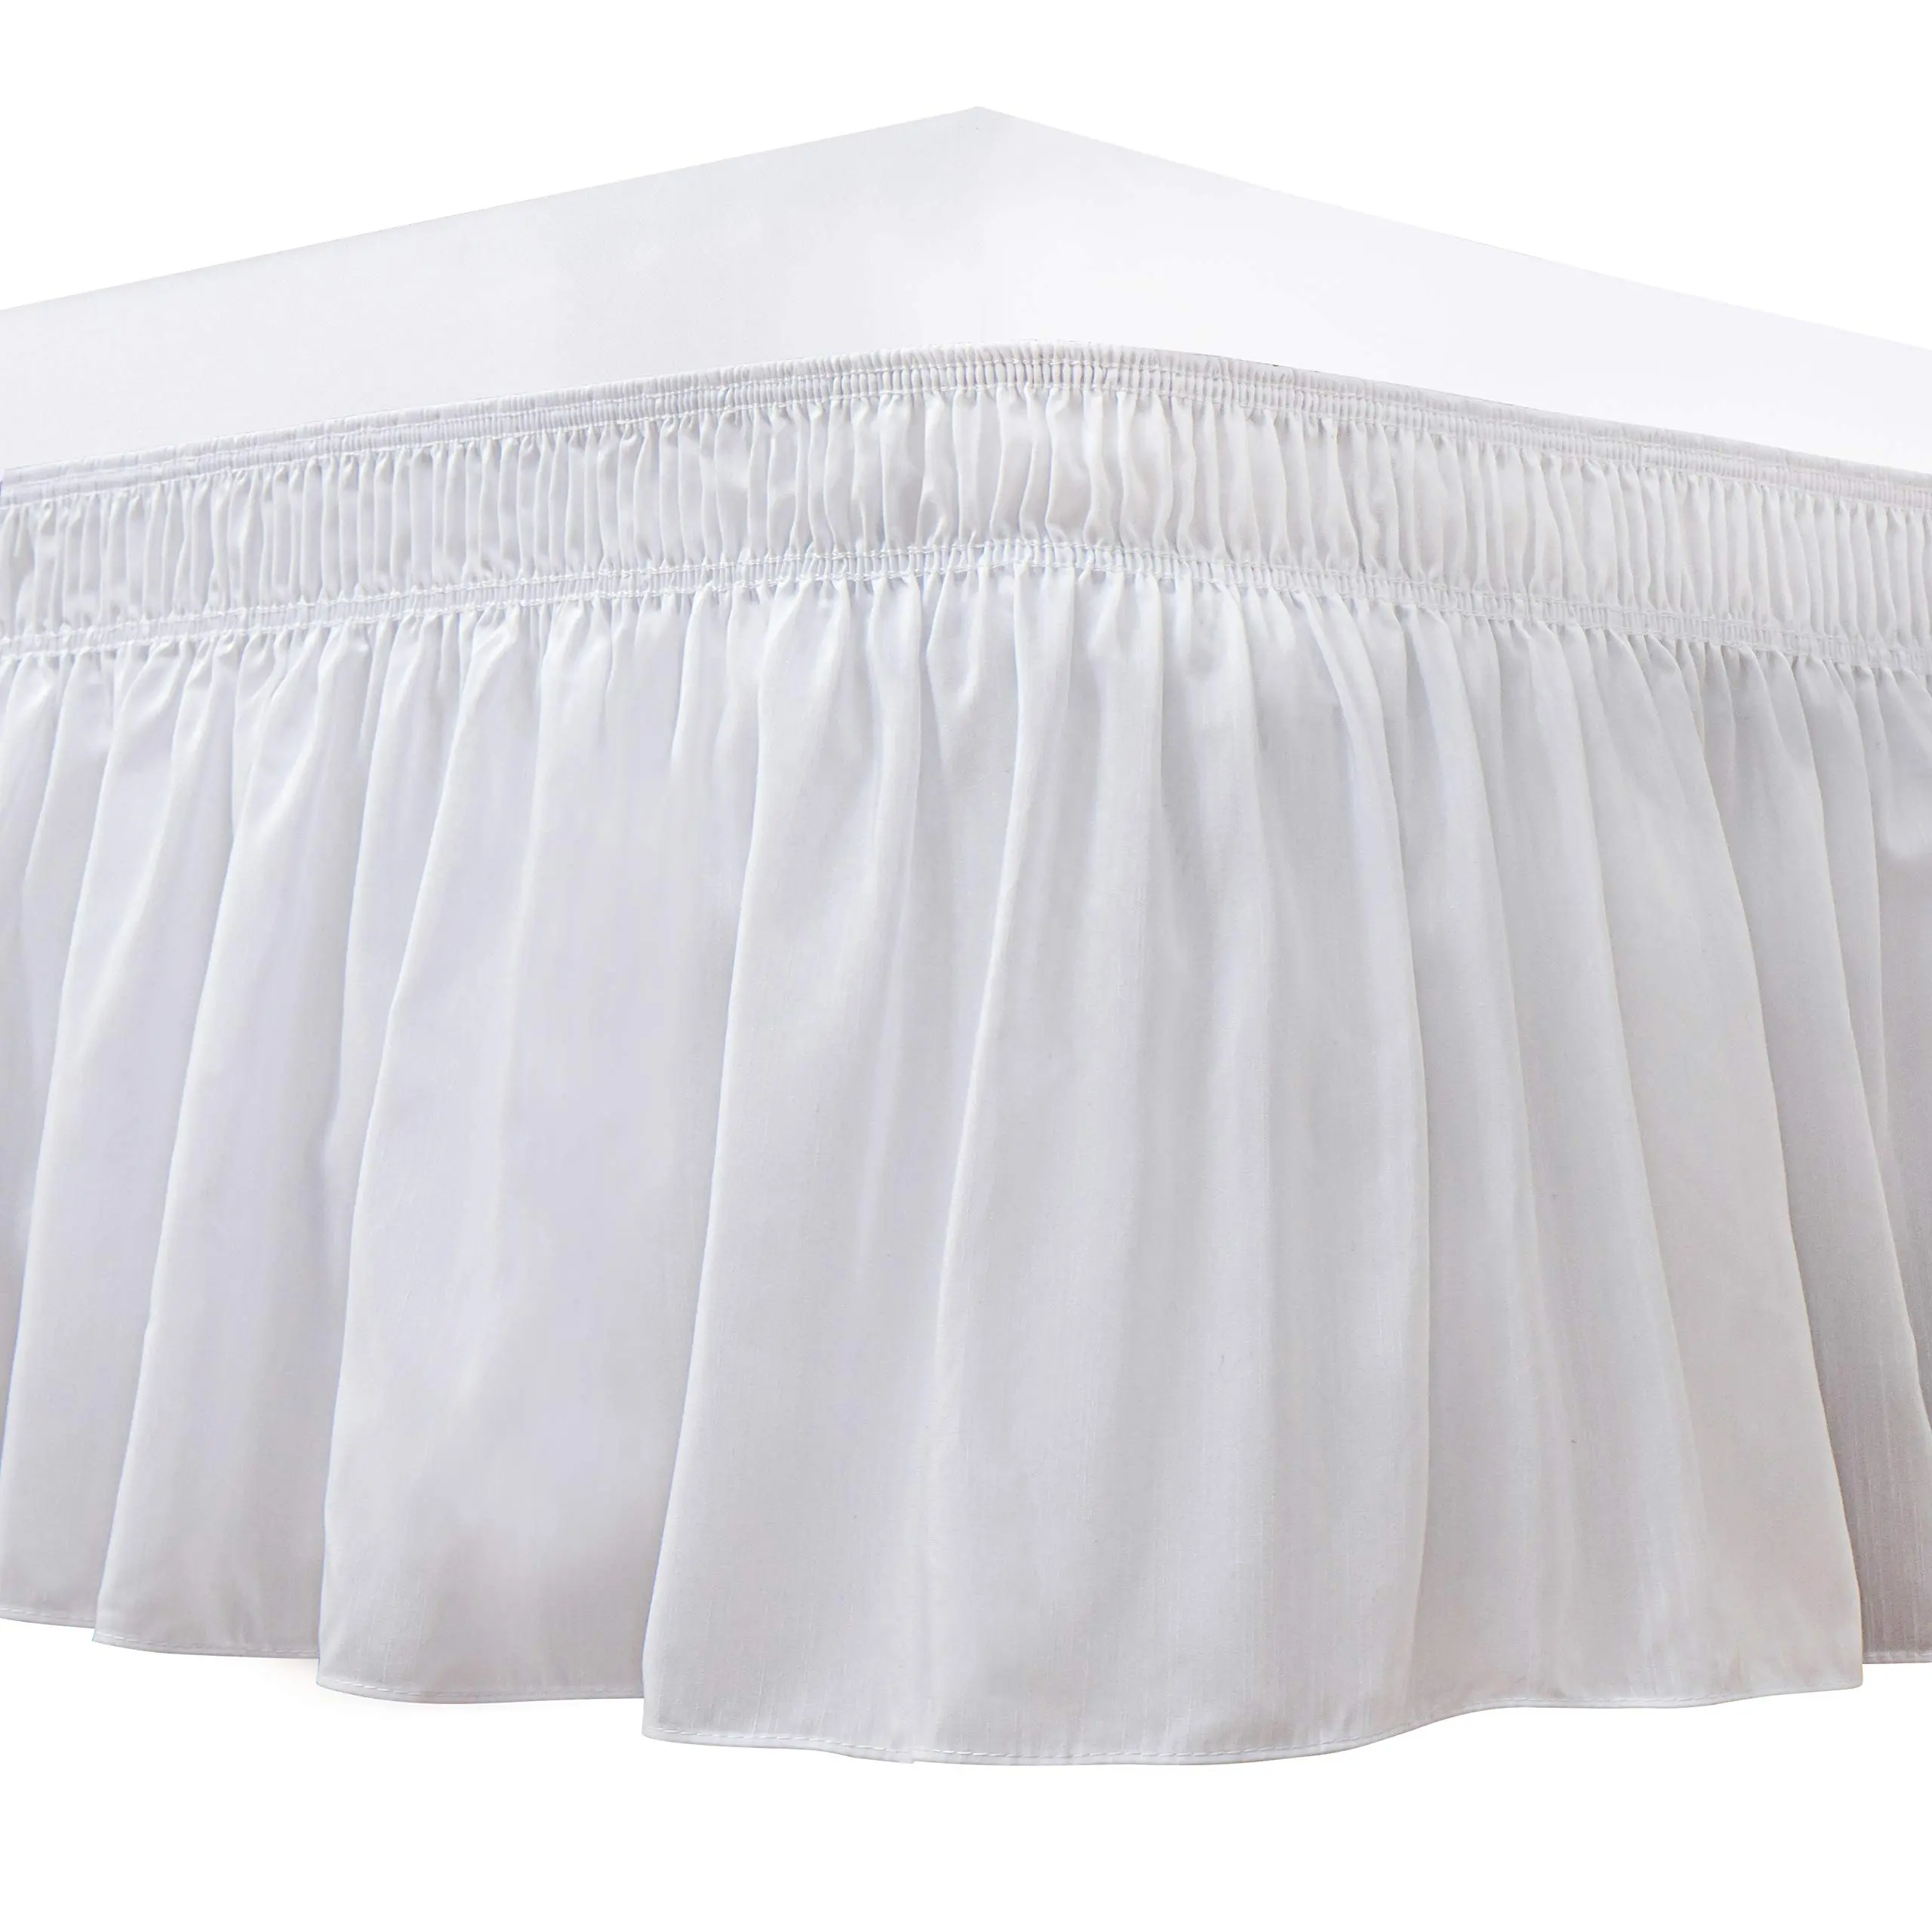 Queen Full King Twin Dorm Mattress Jupes Lit Dust Ruffle Bedspread Bed Cover Skirt Bed Skirt Cotton faldones para cama